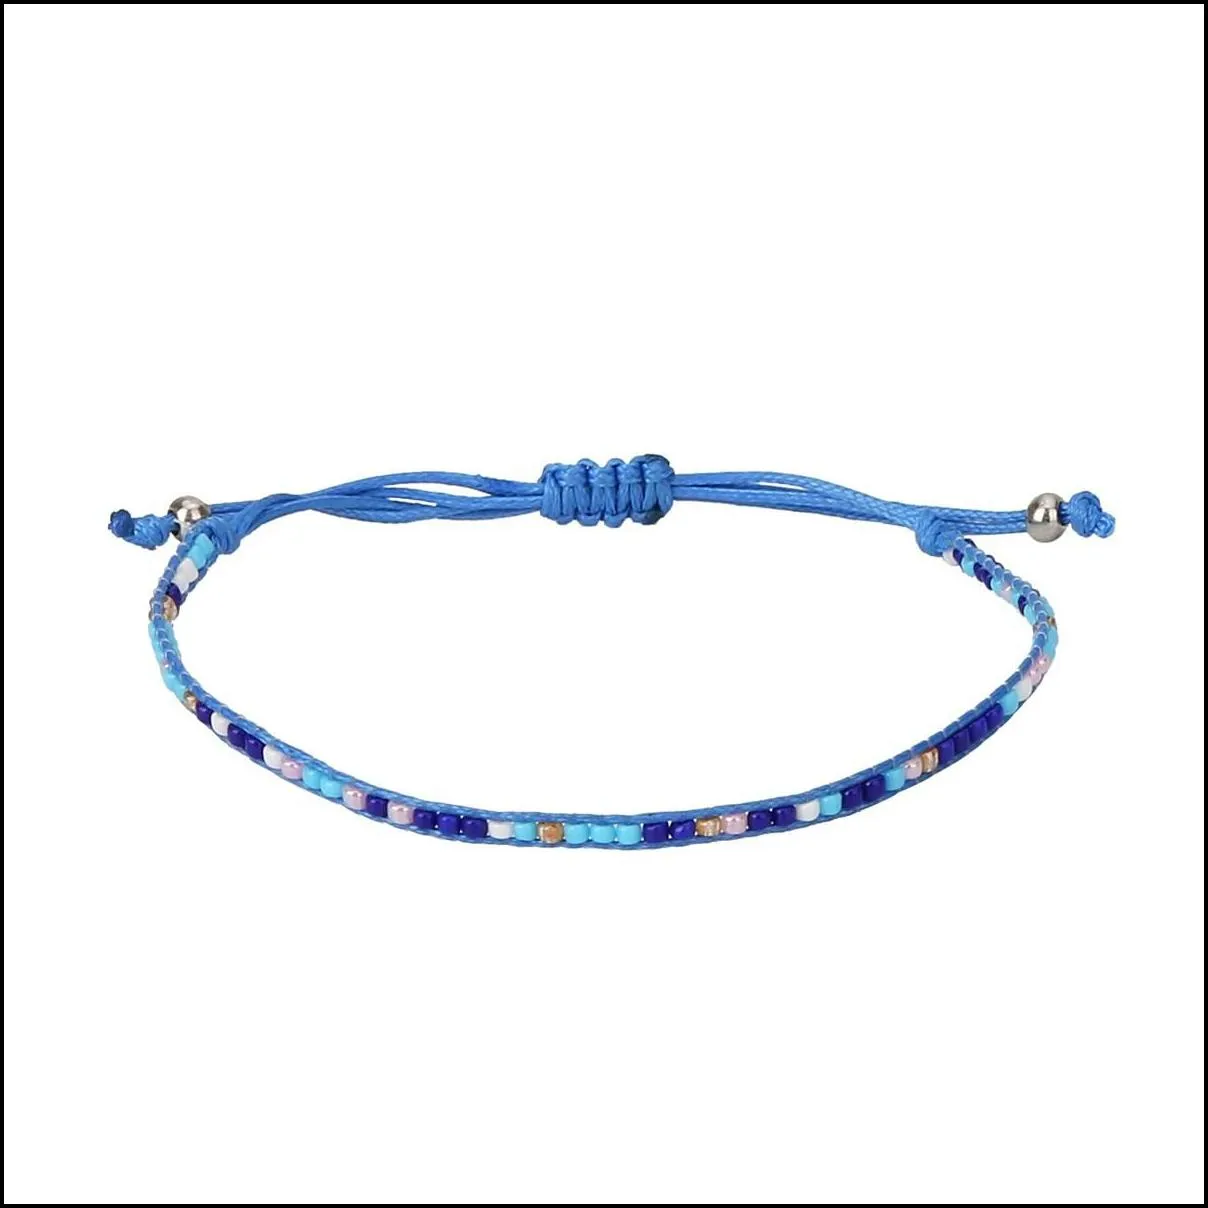 10pc/set fashion braided rope bracelet set handmade waterproof wrap bracelet charm woman kids for gift